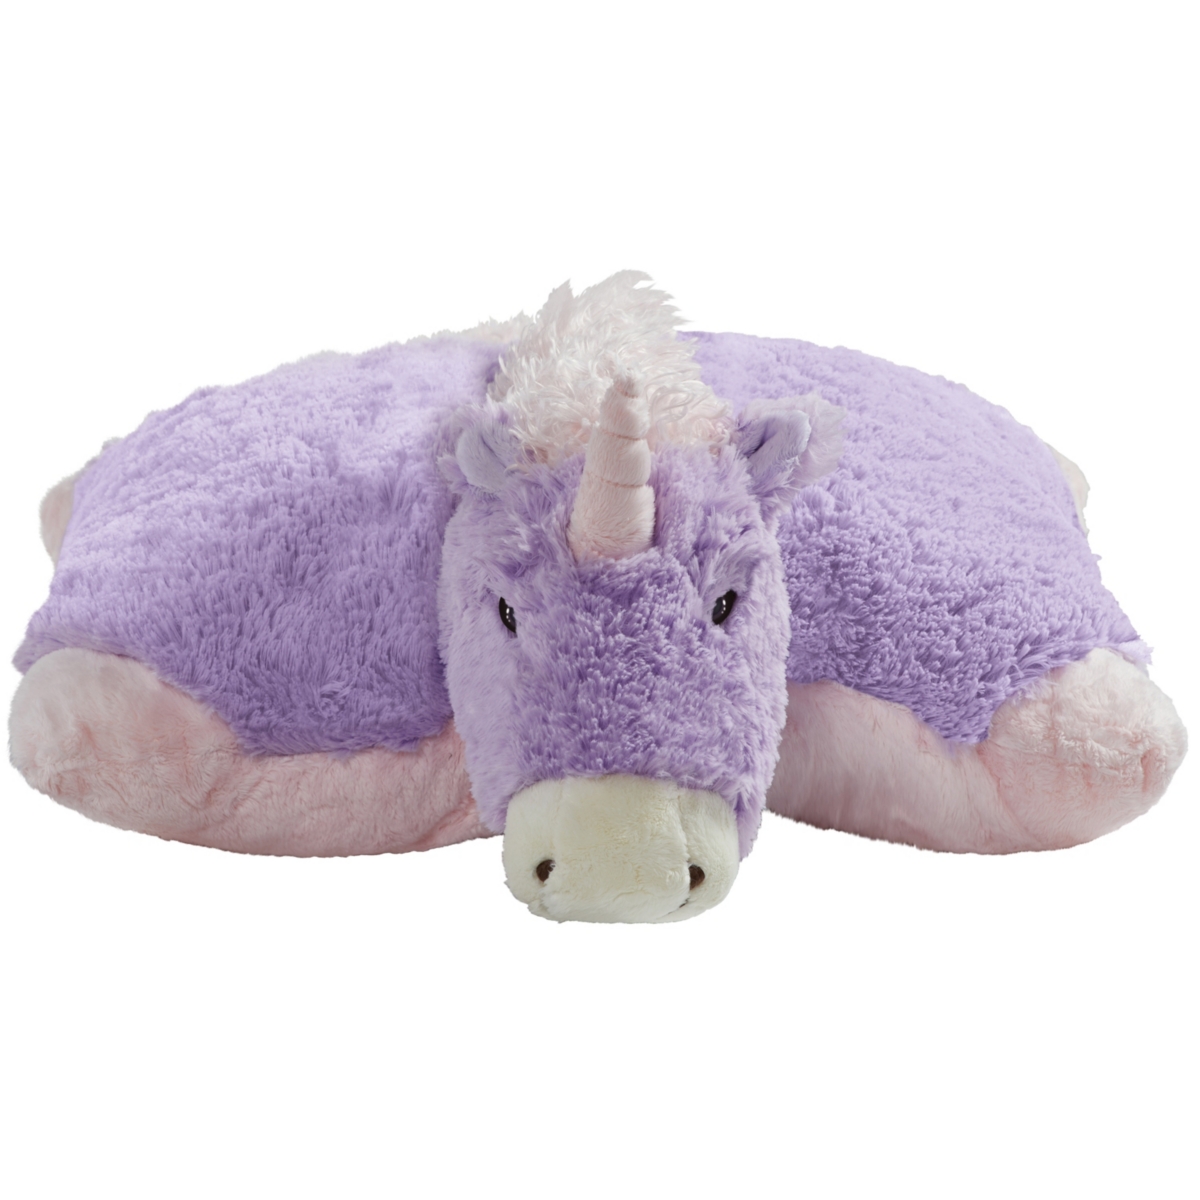 Shop Pillow Pets Signature Magical Unicorn Stuffed Animal Plush Toy In Lightpaste